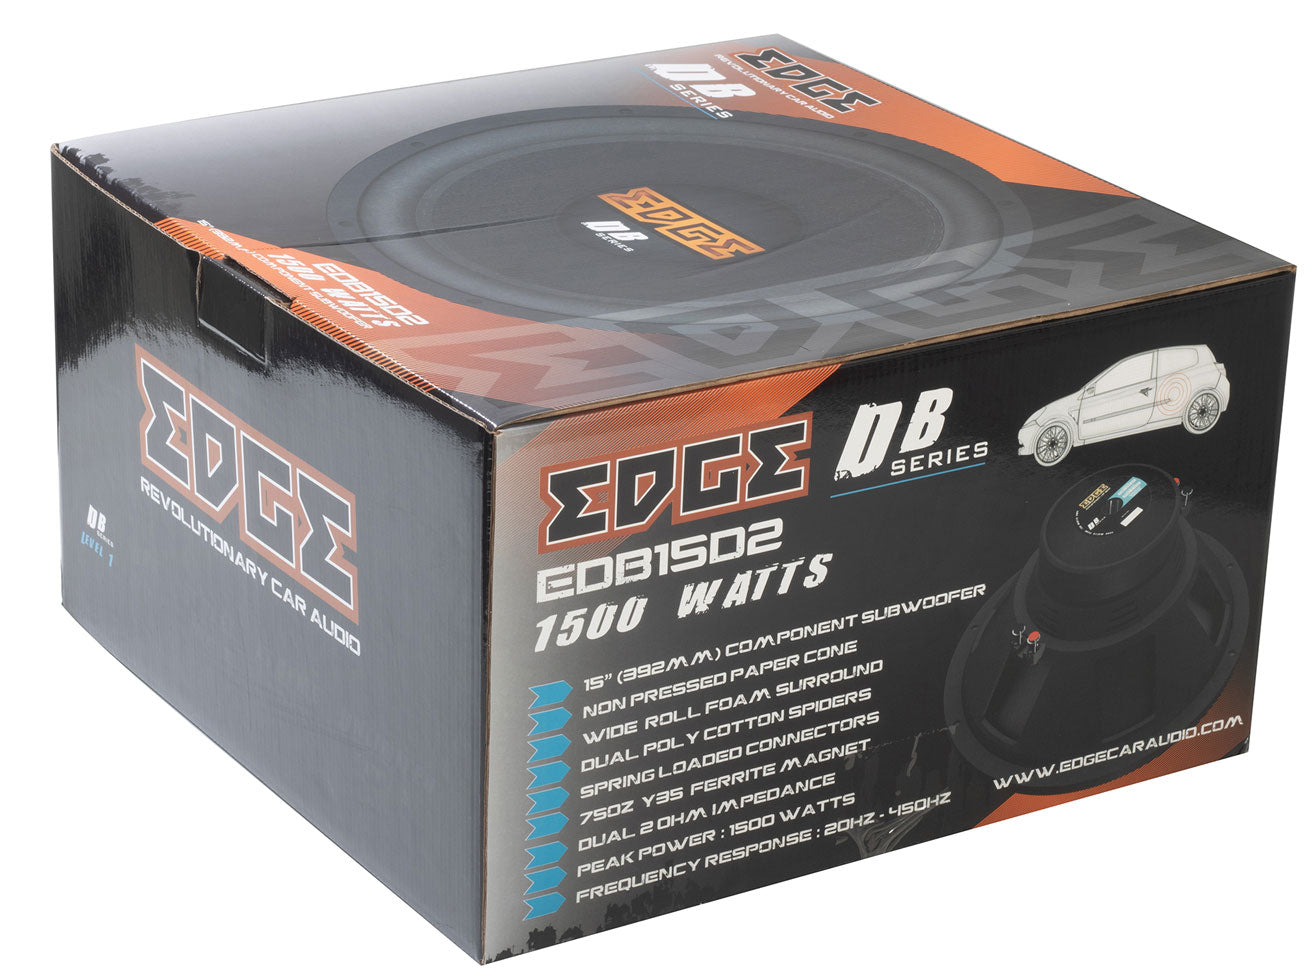 EDB15D2-E0 | EDGE DB Series 15 inch 1500 watts Subwoofer